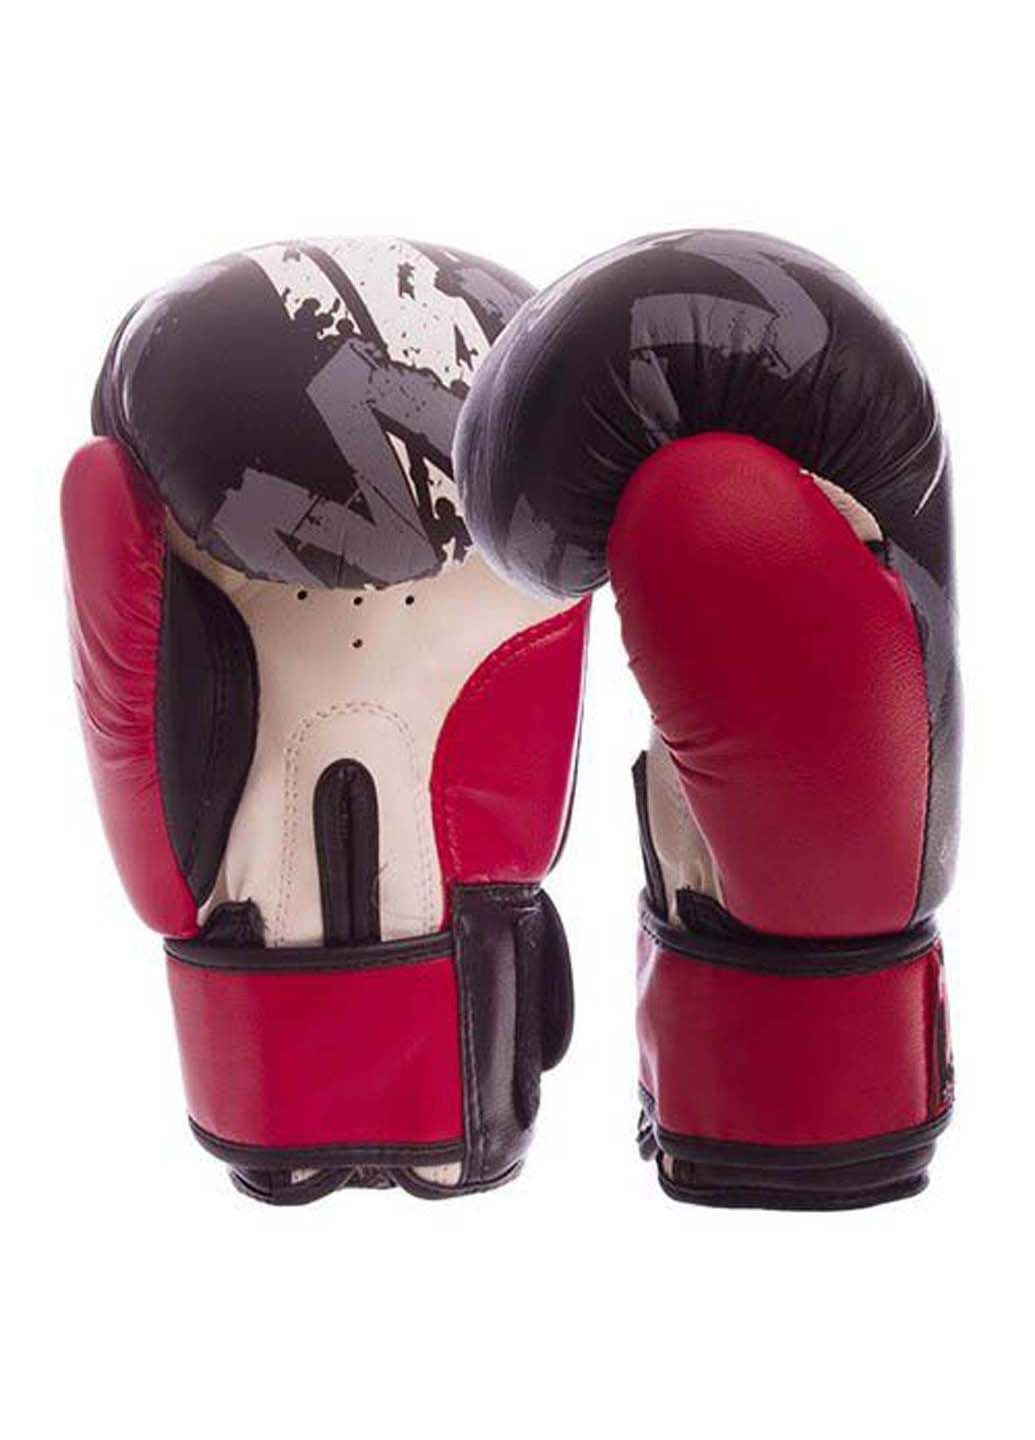 Перчатки боксерские TW-2206 4oz Twins (285794192)